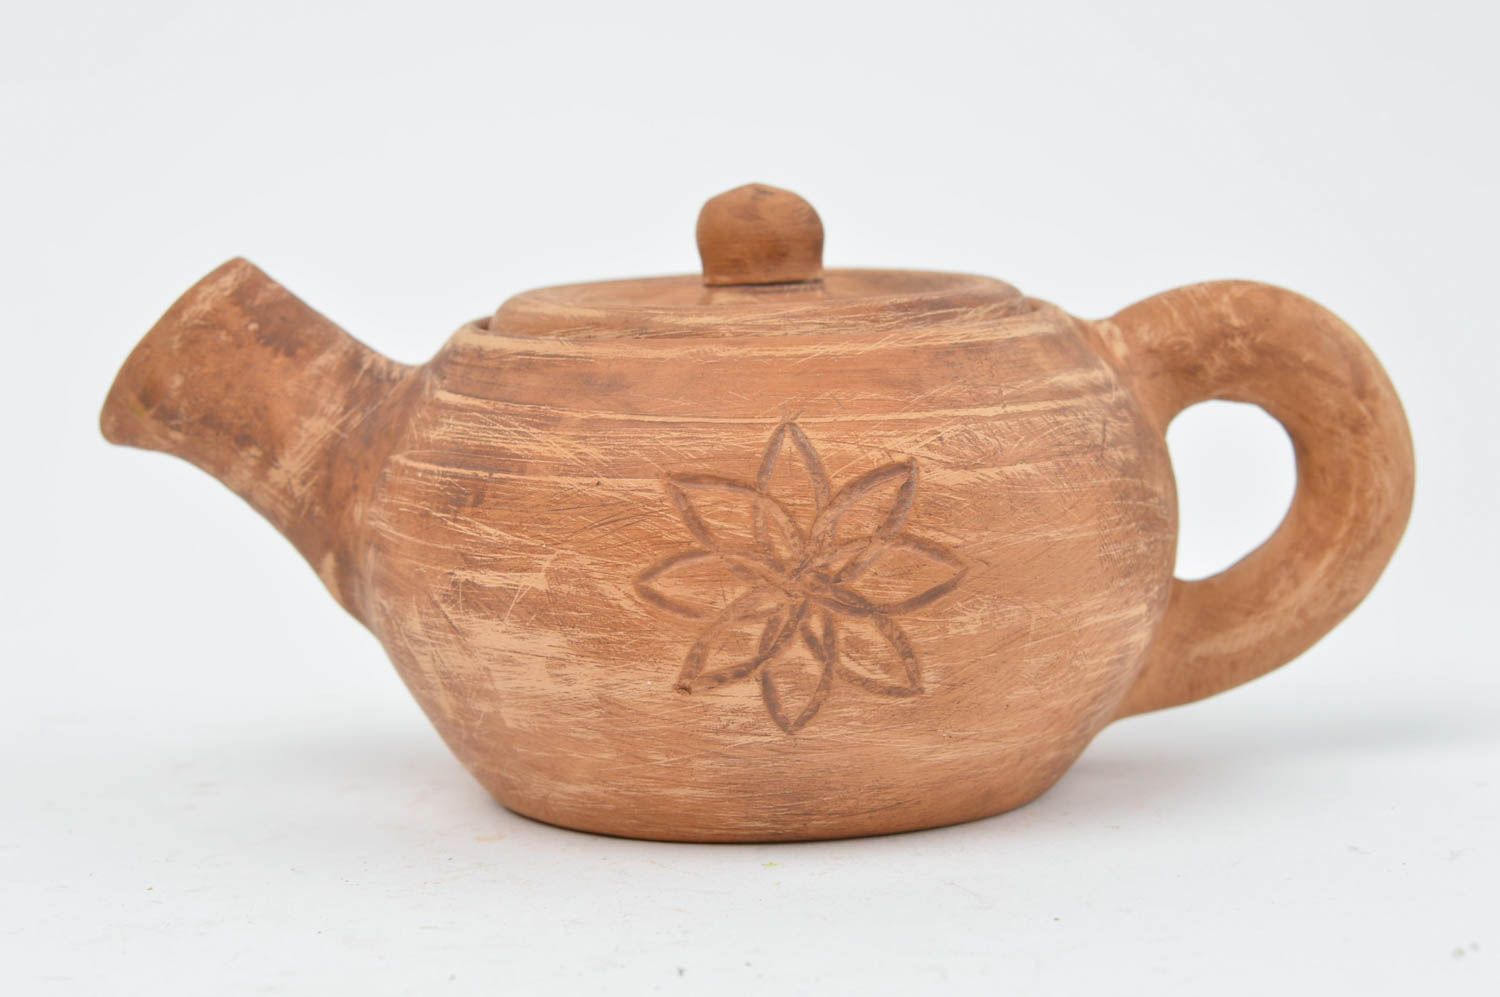 Stylish teapot made of clay cute handmade pottery unusual kitchen utensils photo 2